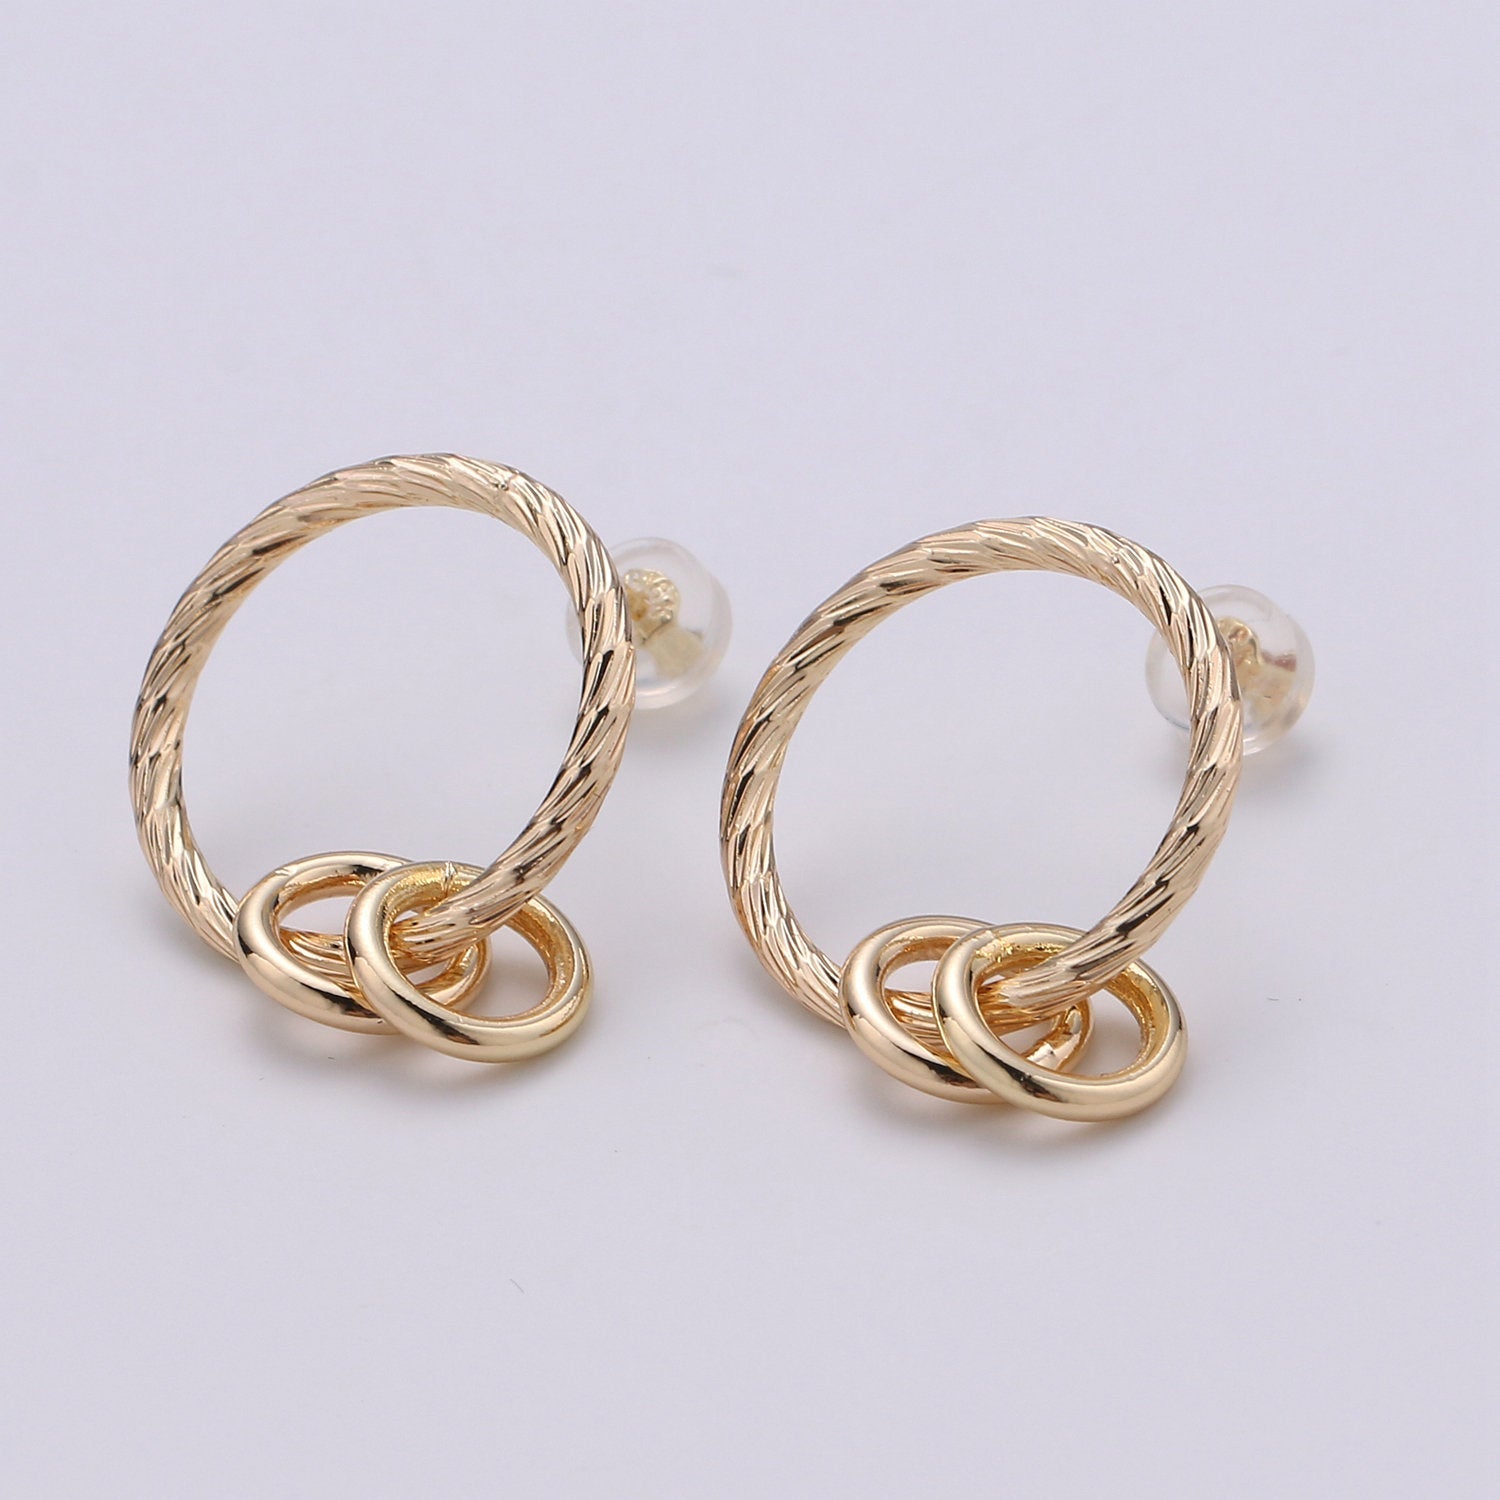 Dainty Gold Hoop Earrings, Gold Disk Earrings, Tiny Hoops with Coin Charm, Geometric Earrings, Gold Huggie Earrings, Minimalist Hoops, Gift - DLUXCA